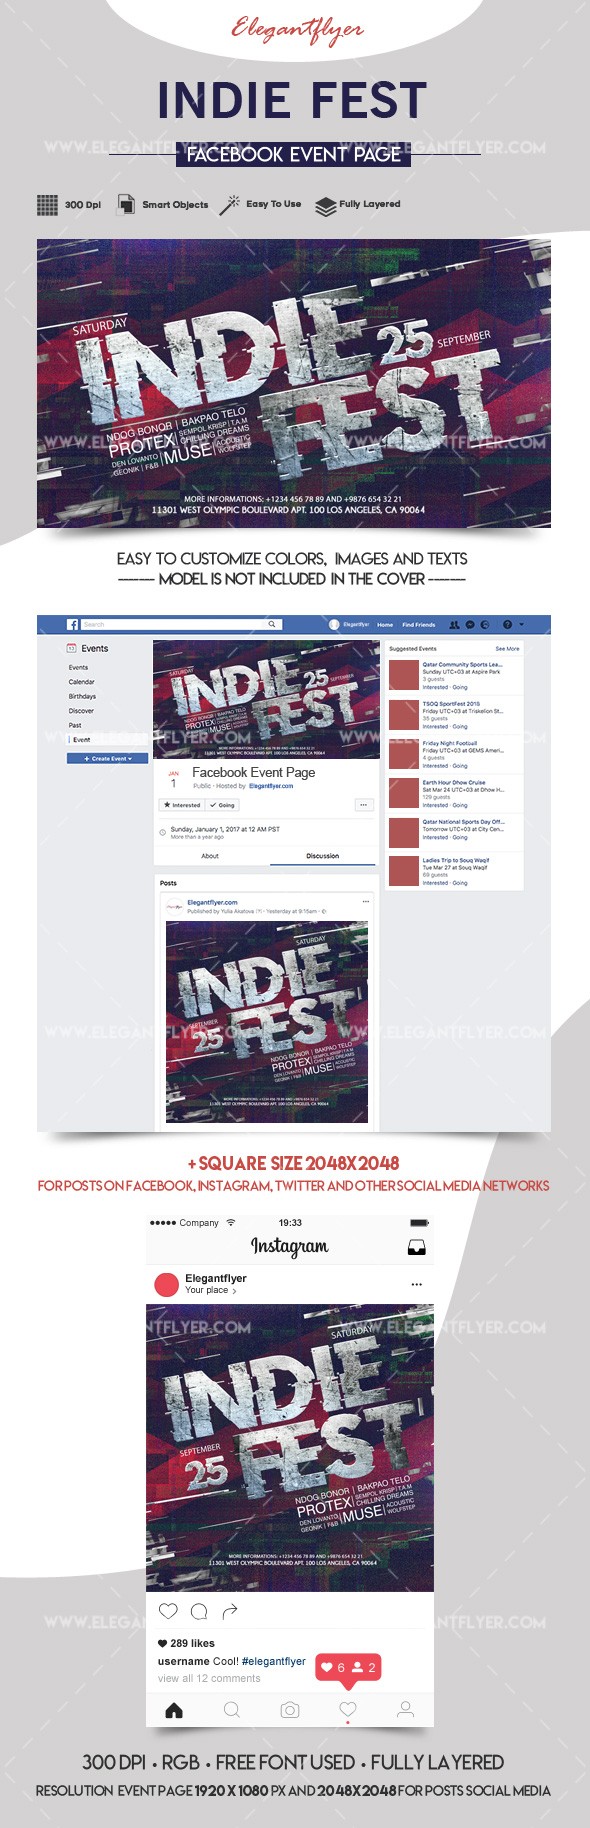 Indie Fest Facebook by ElegantFlyer